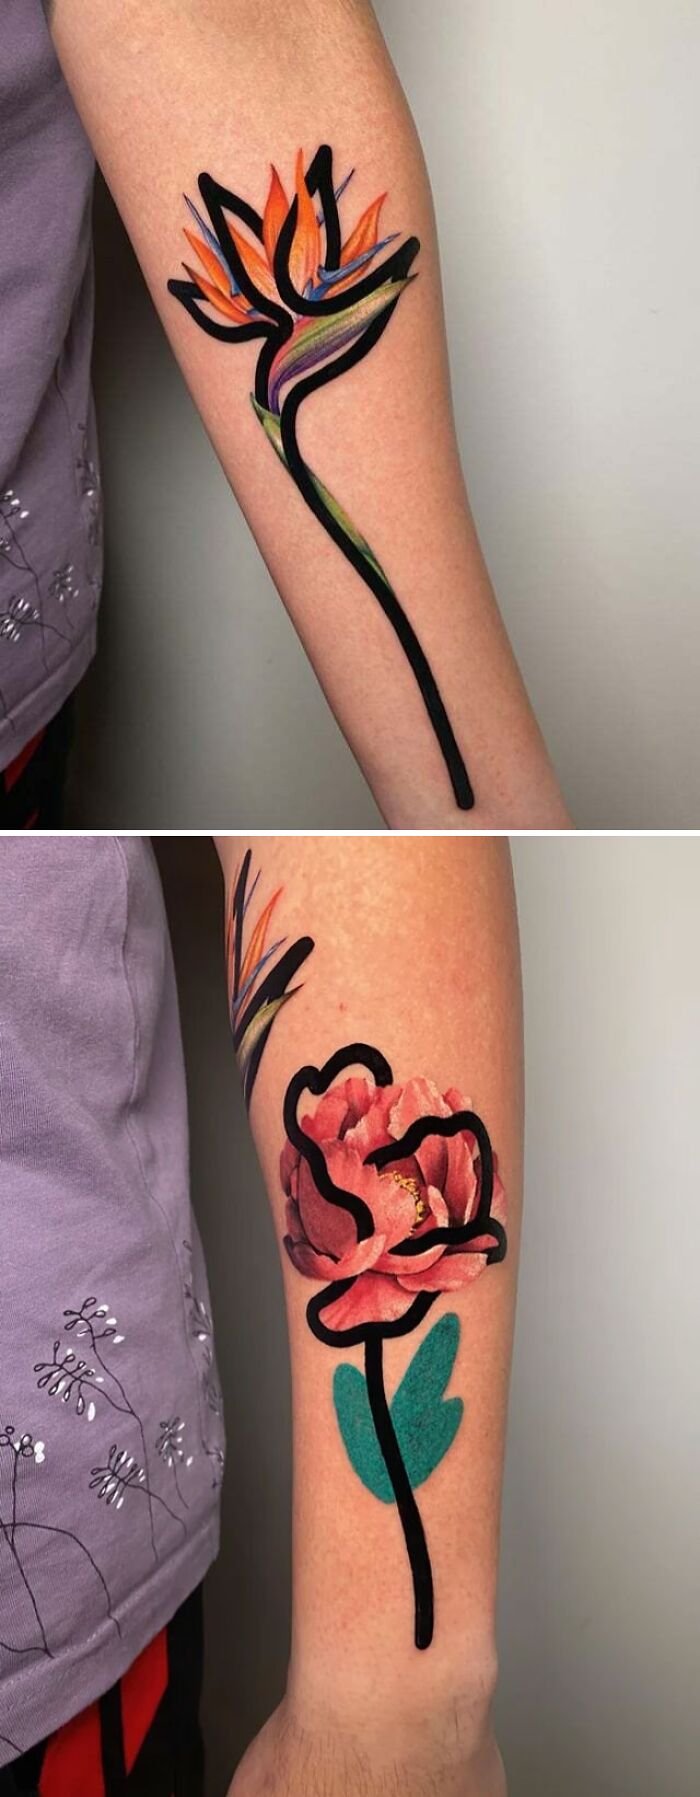 Bird of paradise hand tattoo